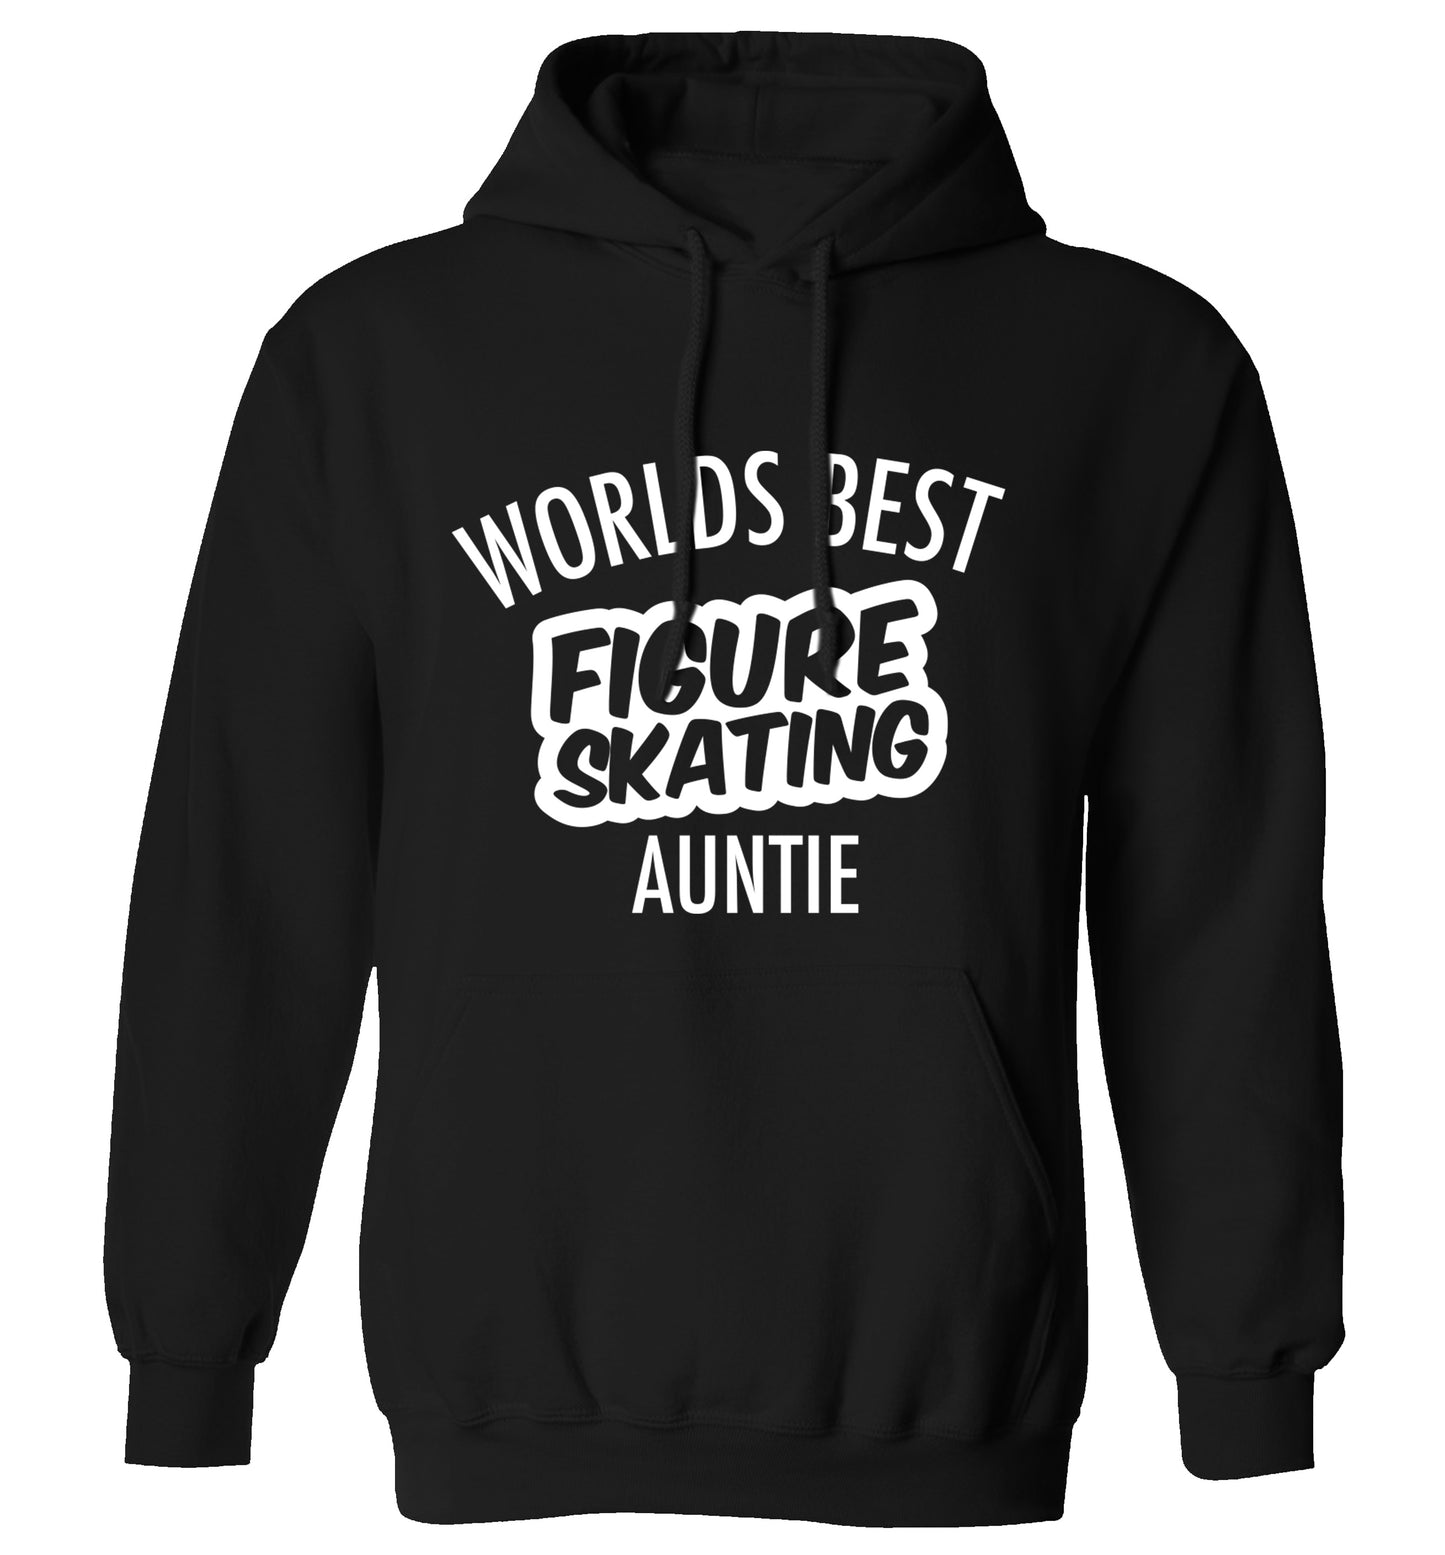 Worlds best figure skating auntie adults unisexblack hoodie 2XL